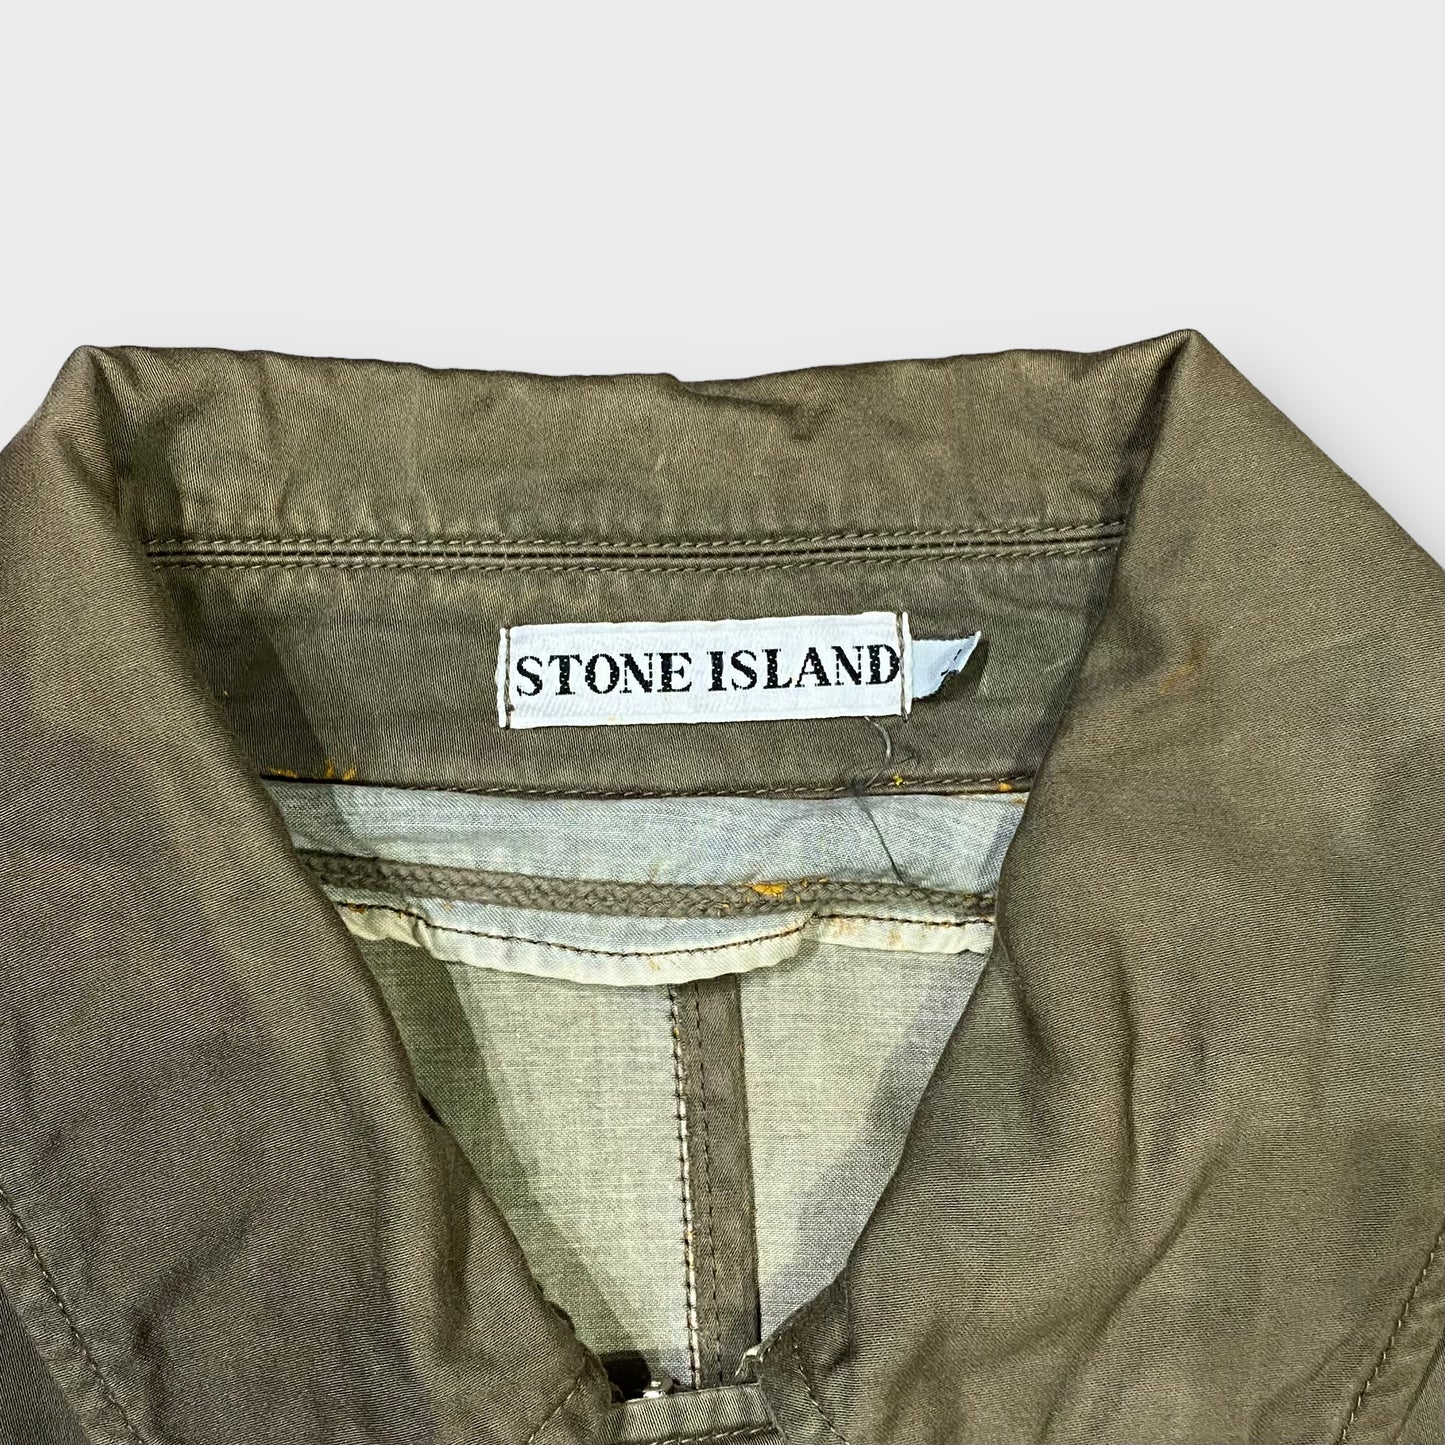 early 90's "STONE ISLAND" RASO GOMMATO jacket designed by Massimo Osti